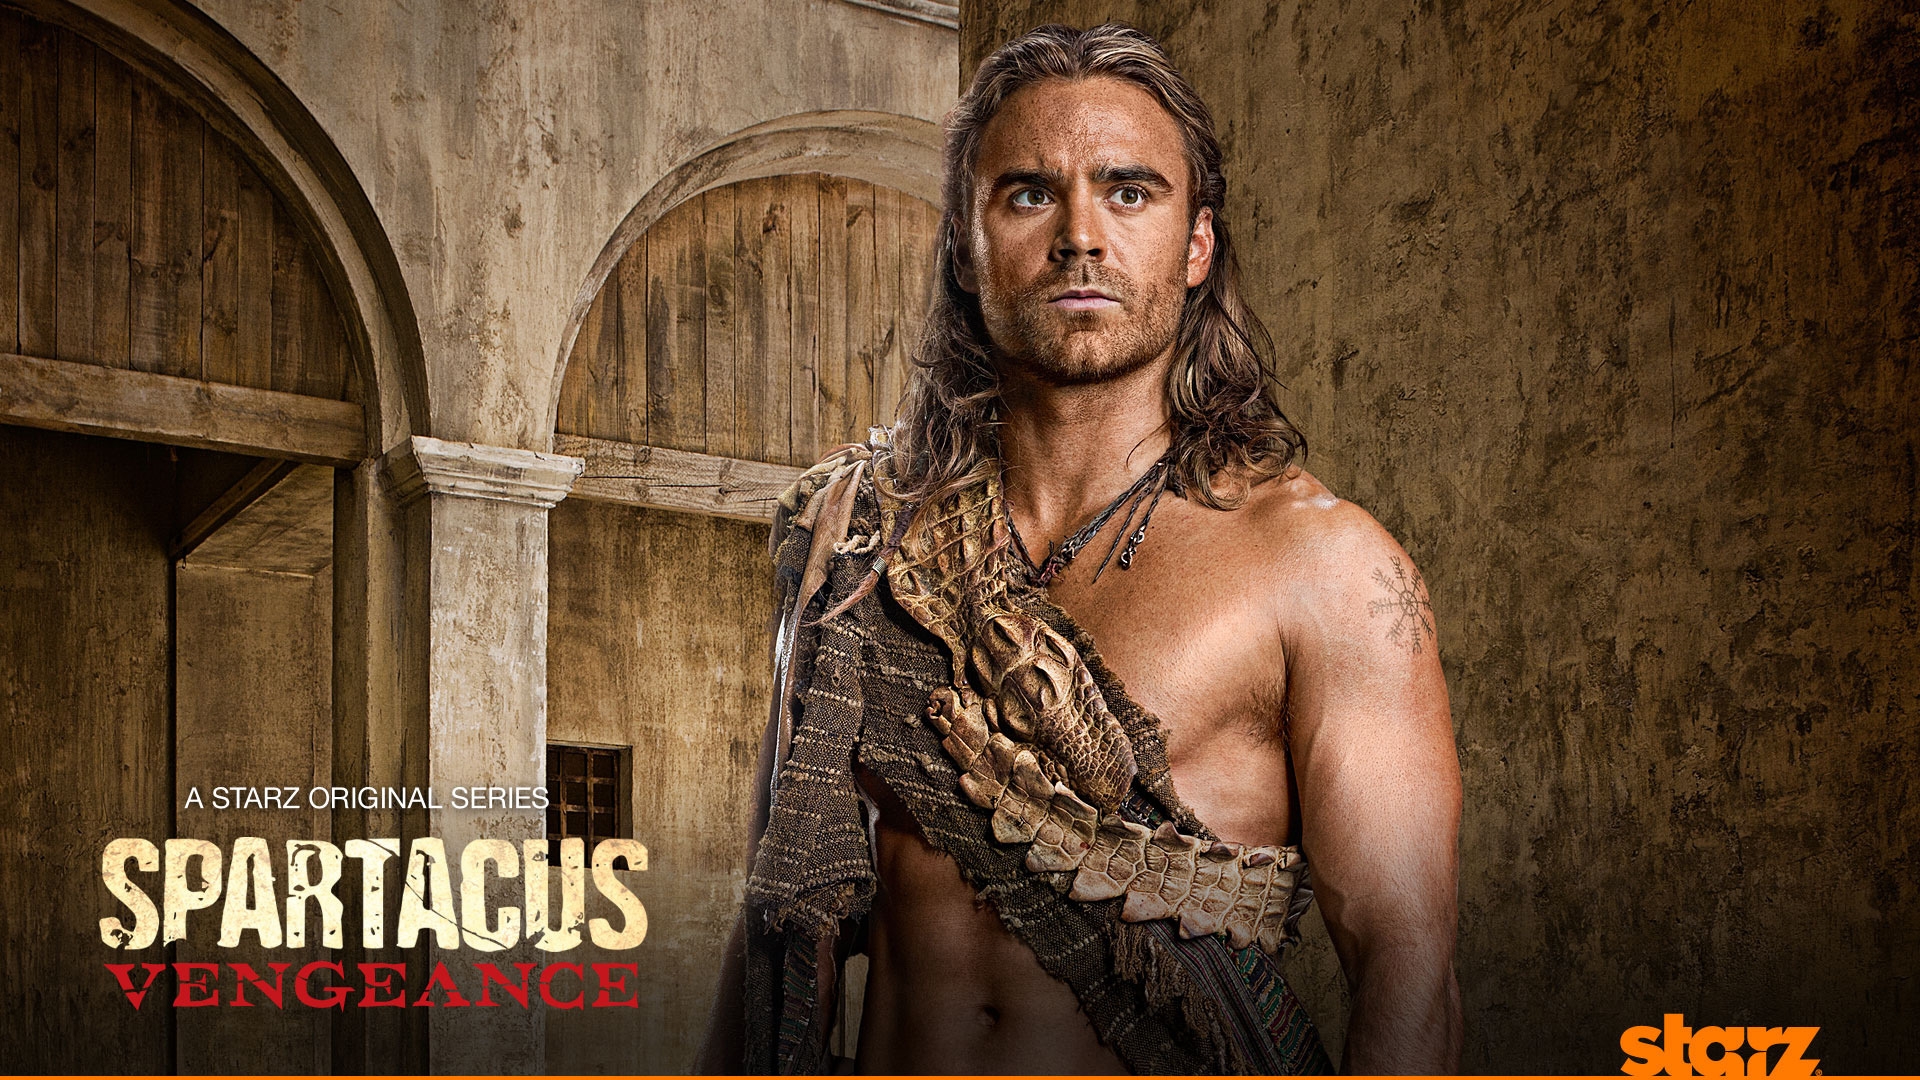 Gannicus Spartacus Vengeance for 1920 x 1080 HDTV 1080p resolution